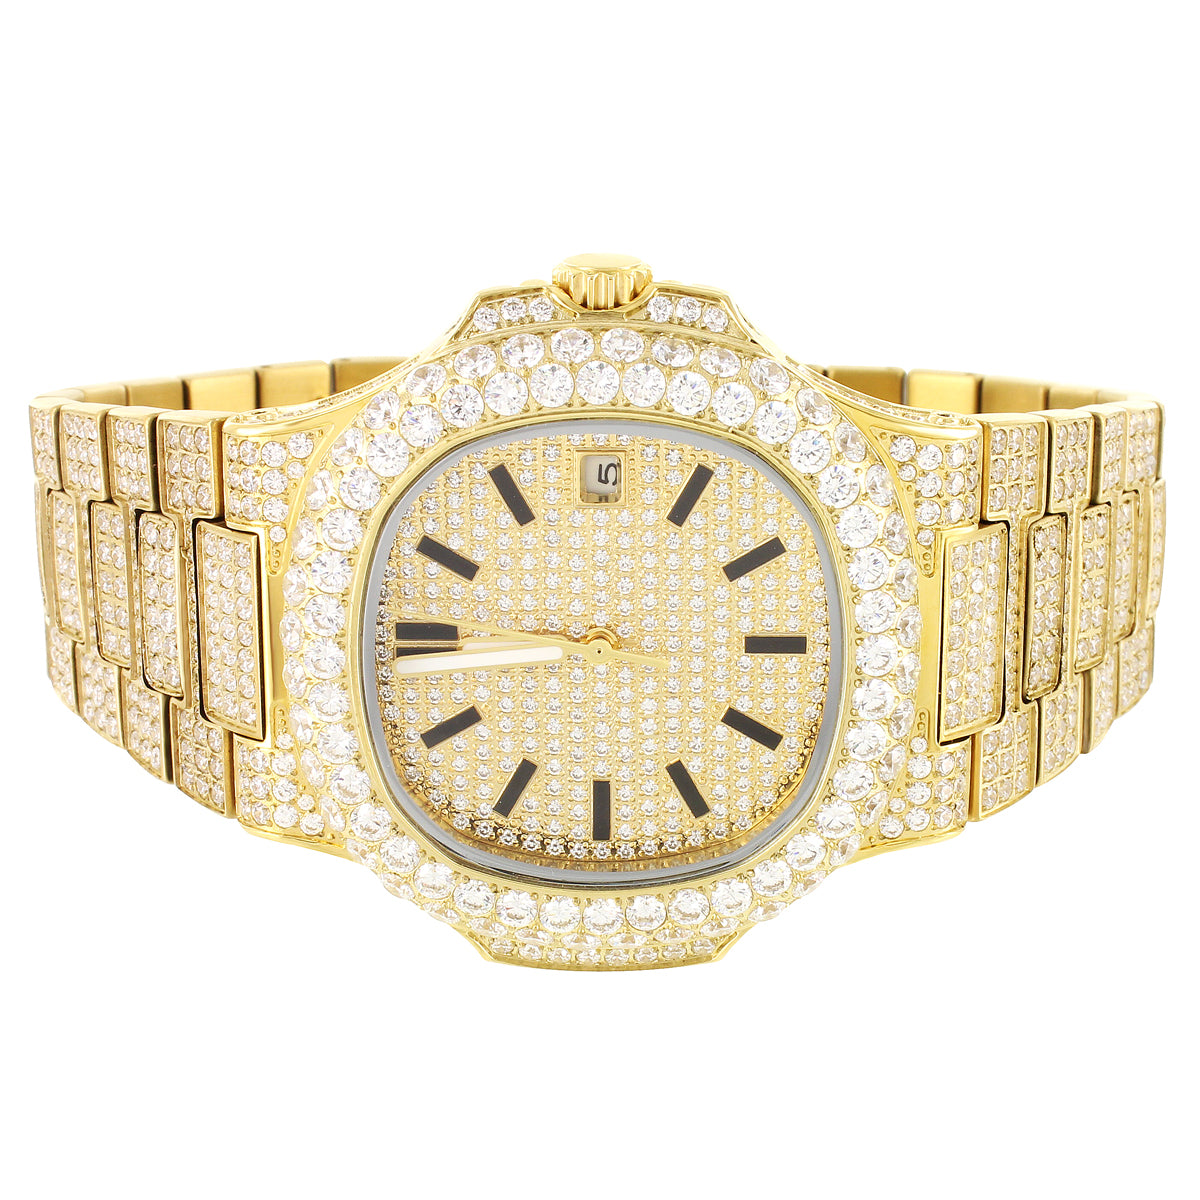 Steel 14k Gold Finish Solitaire Bezel Luxury Men's Watch